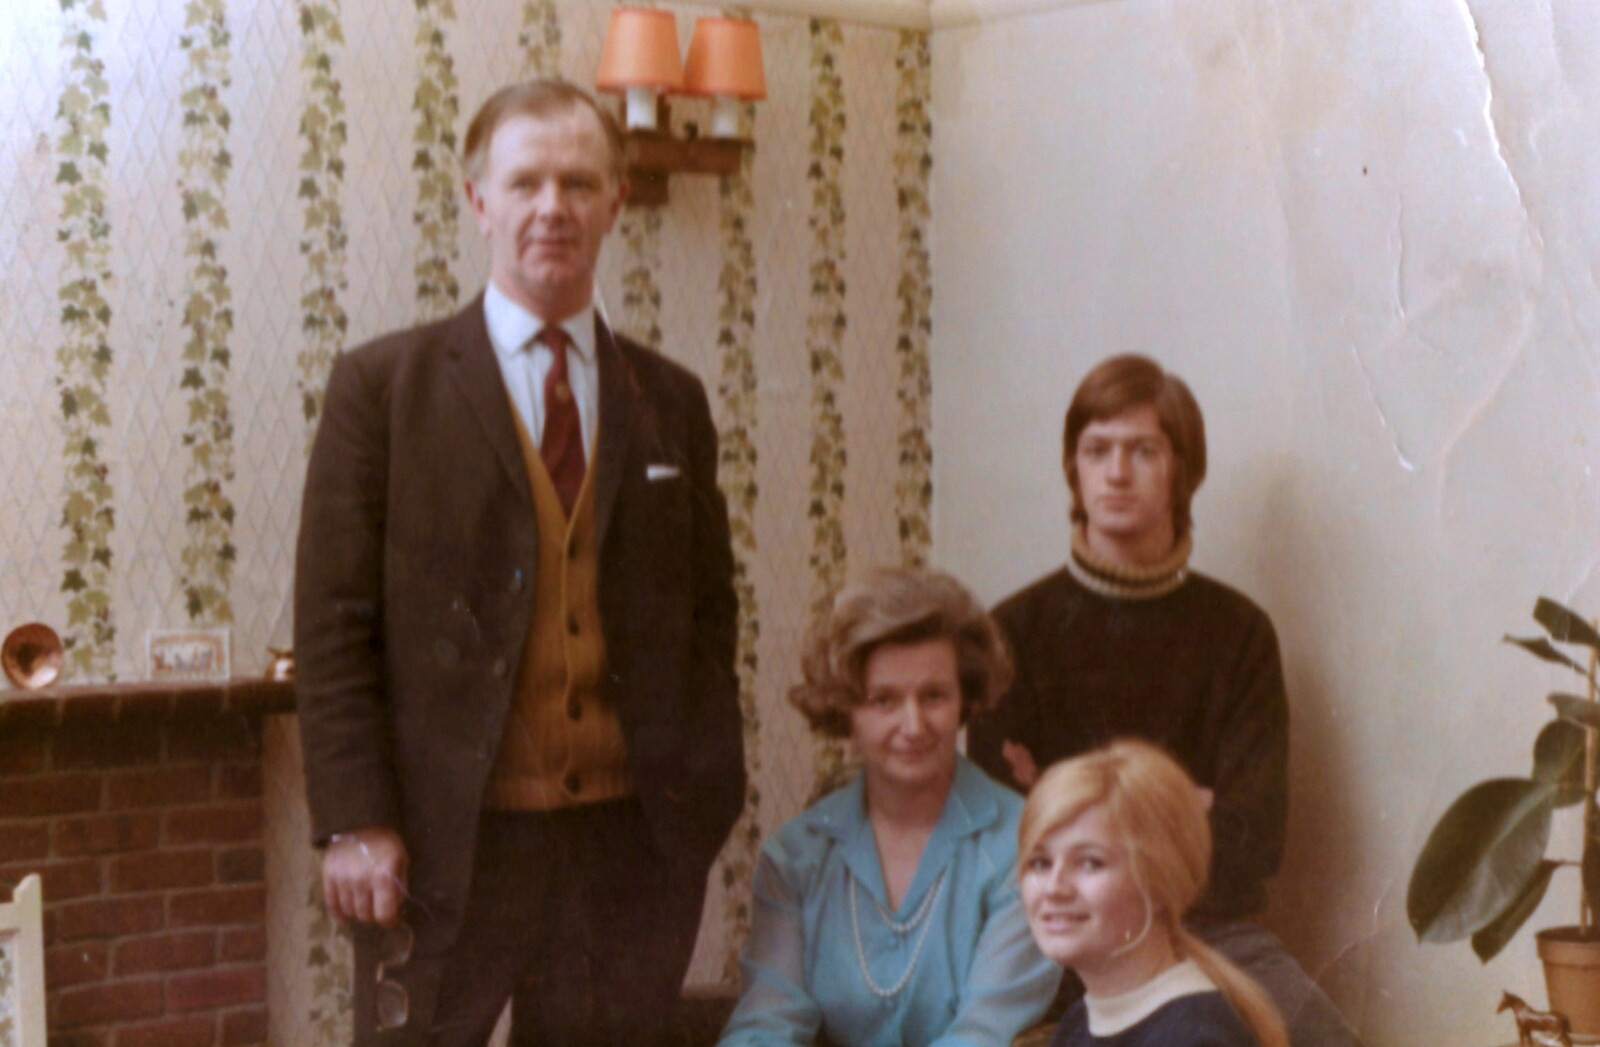 Family History: Danesbury Avenue, Tuckton, Christchurch, Dorset - 24th January 2020: Grandad in the lounge at Danesbury